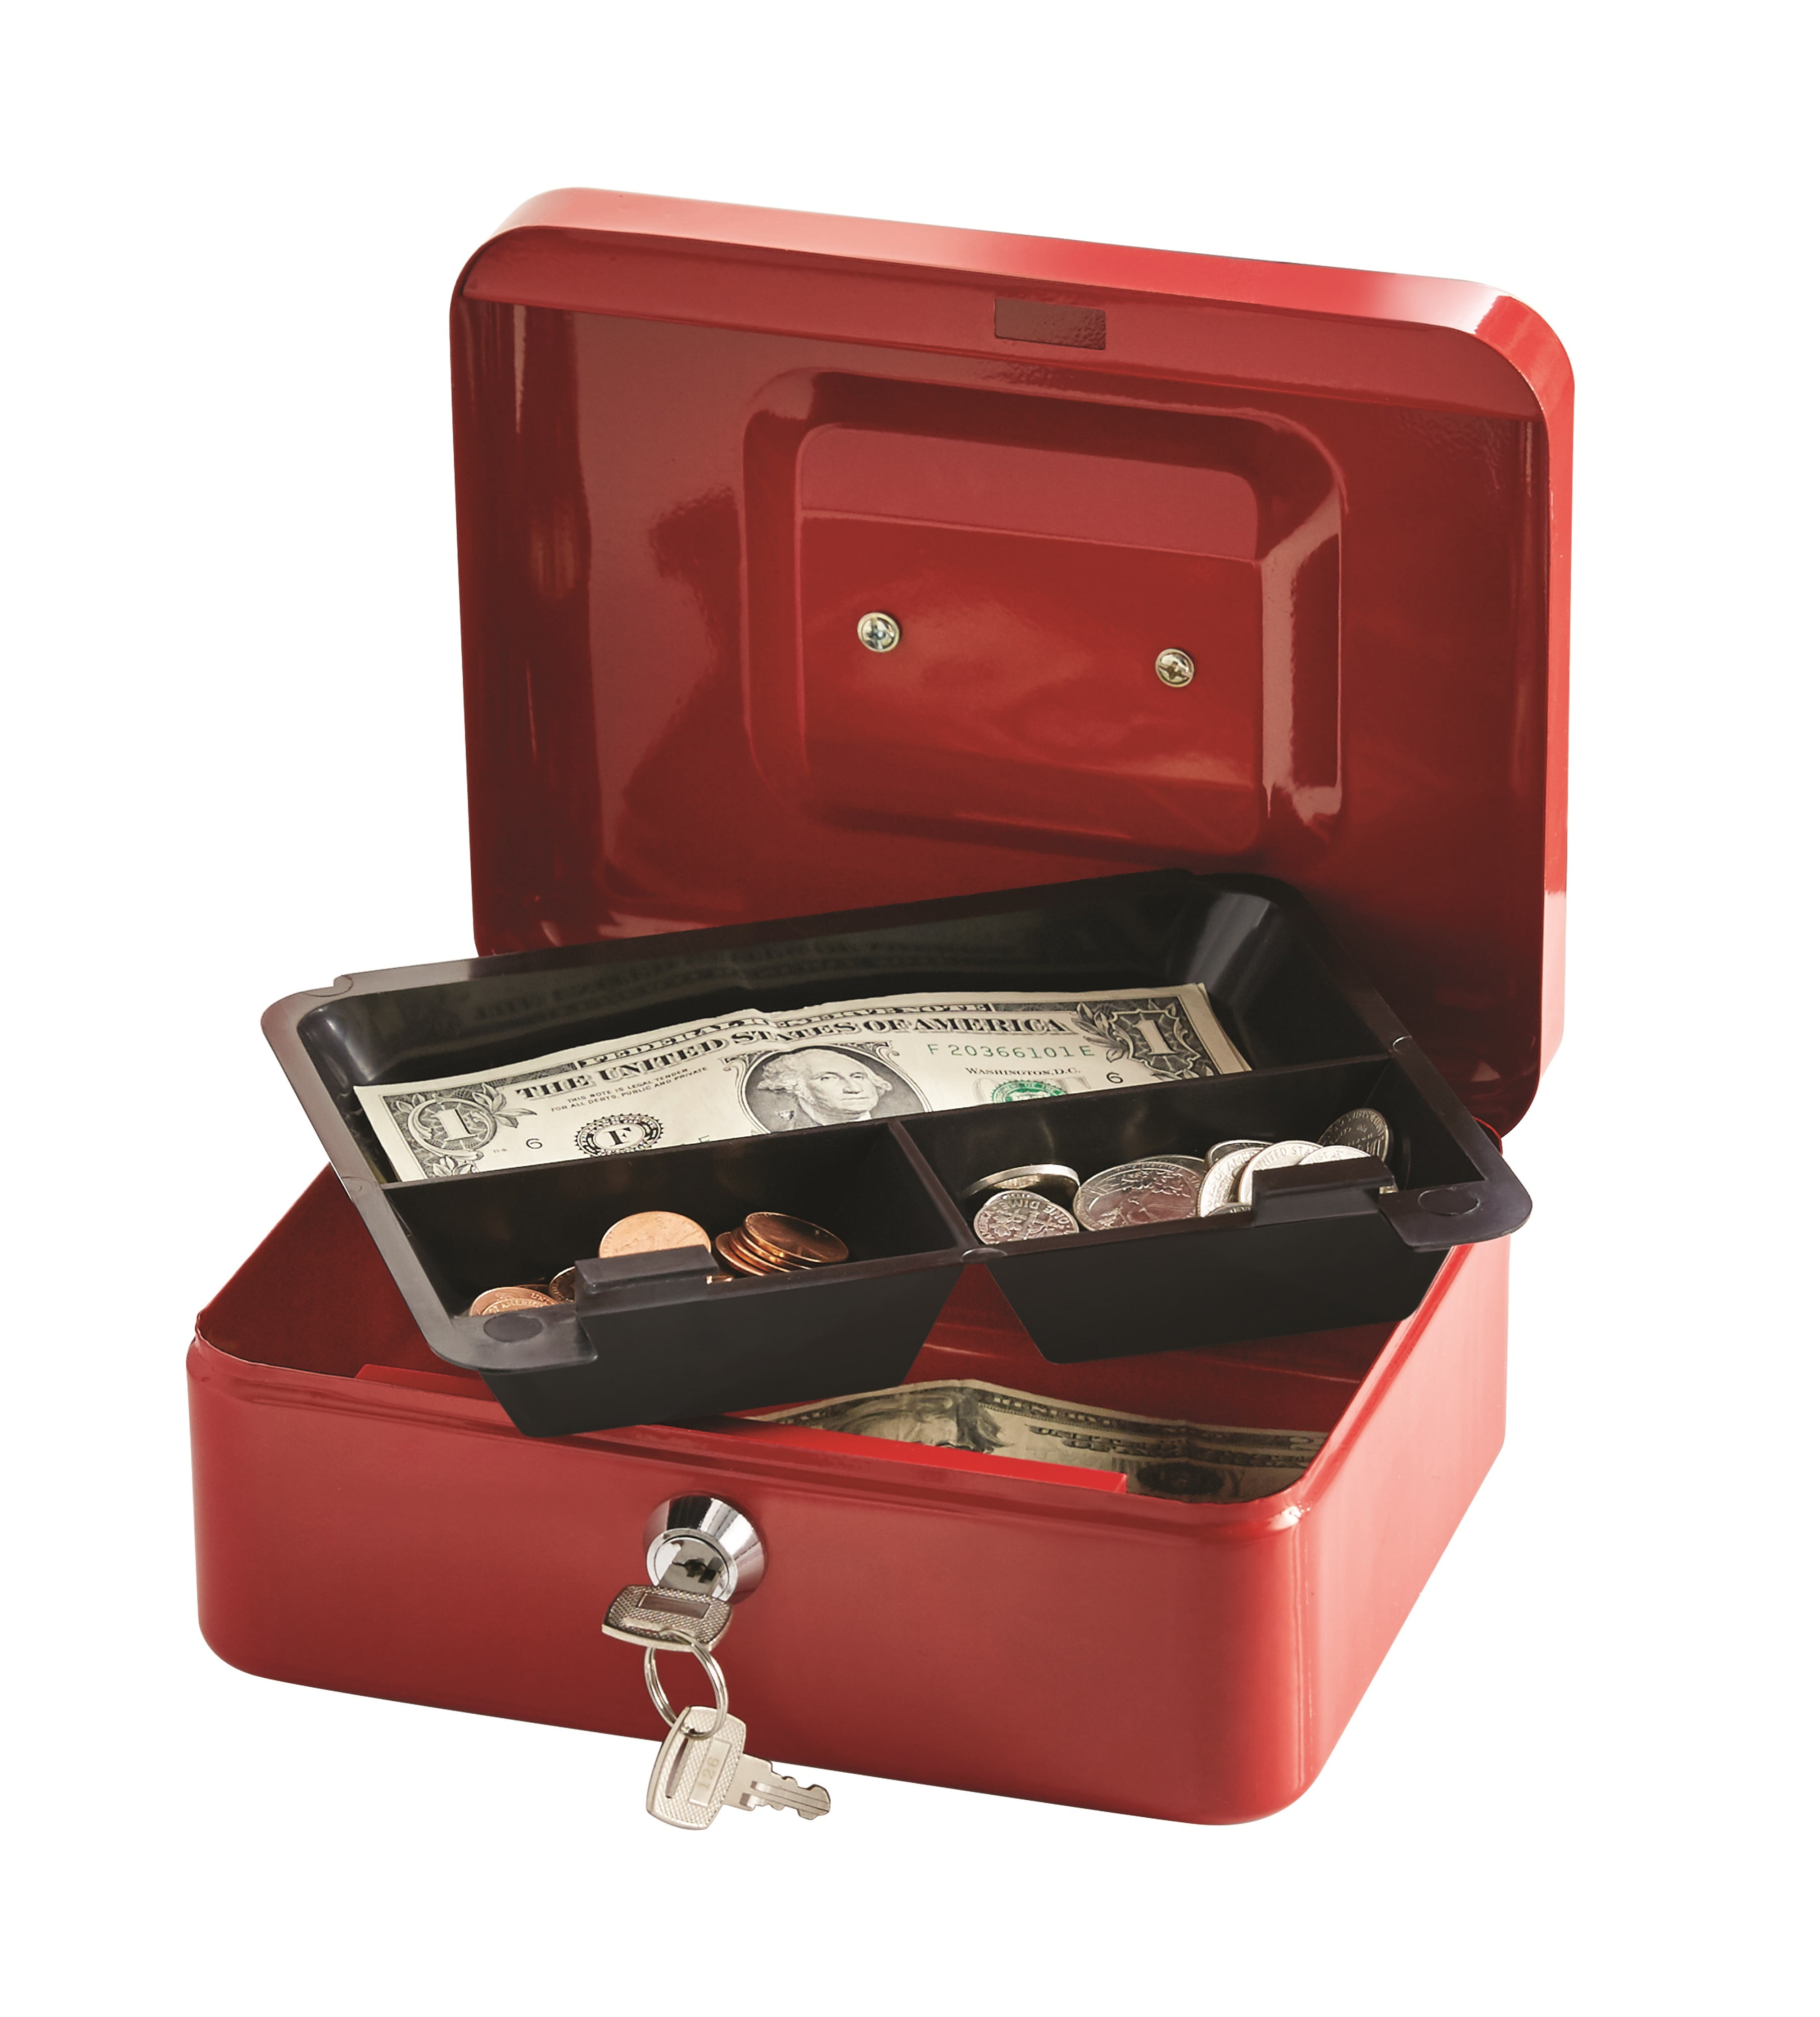 3 Diversion Can Safe Lot hide cash jewelry stash box money metal piggy bank #2 